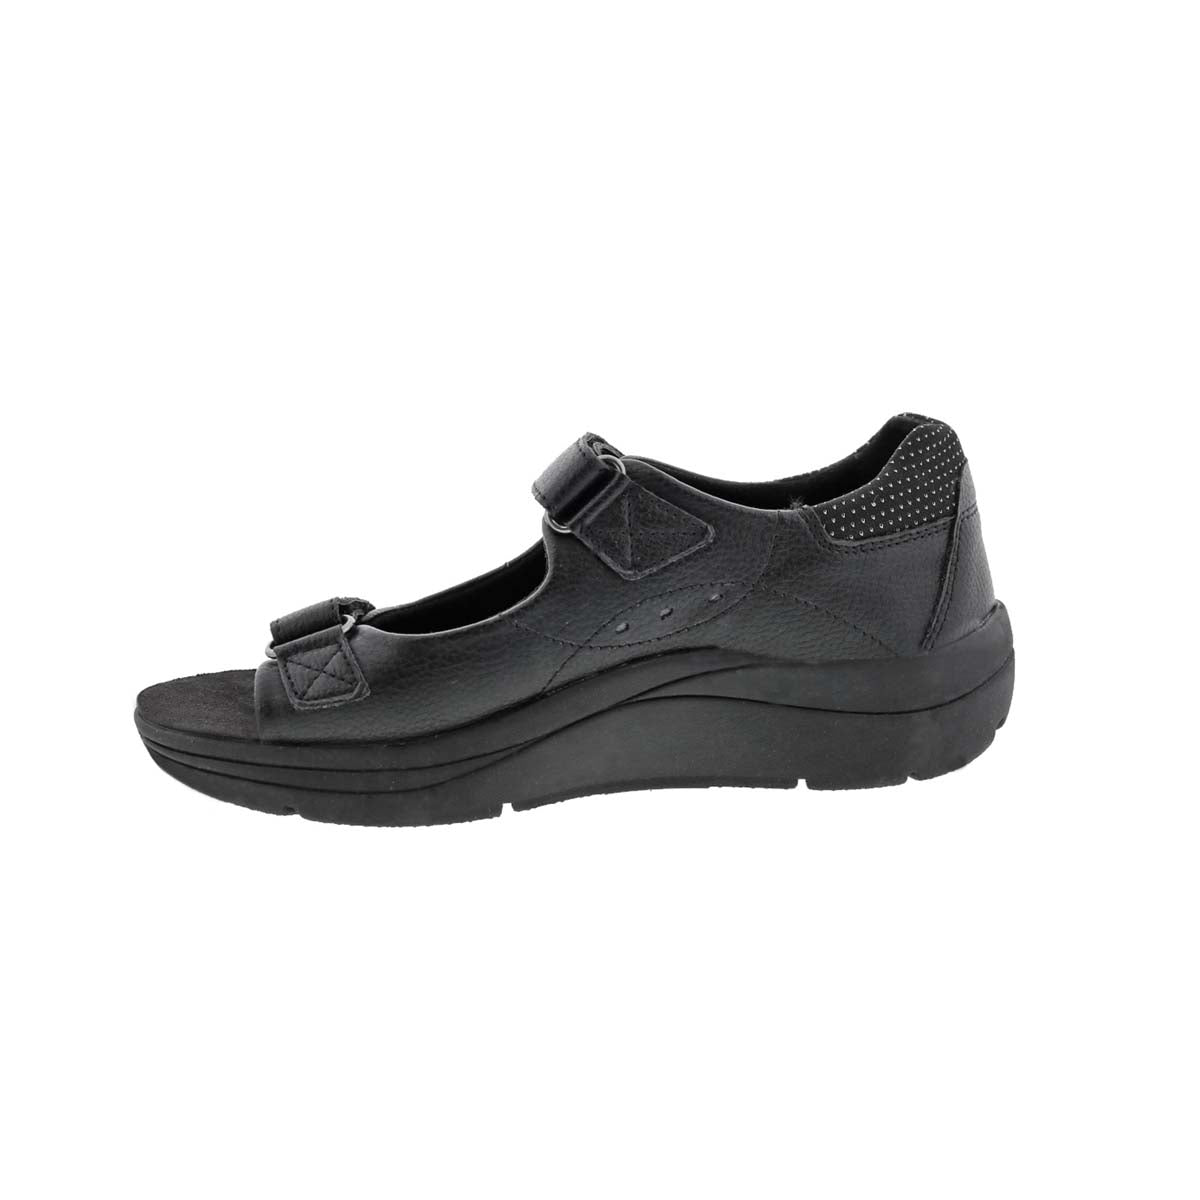 DREW SHASTA WOMEN SANDAL IN BLACK LEATHER - TLW Shoes